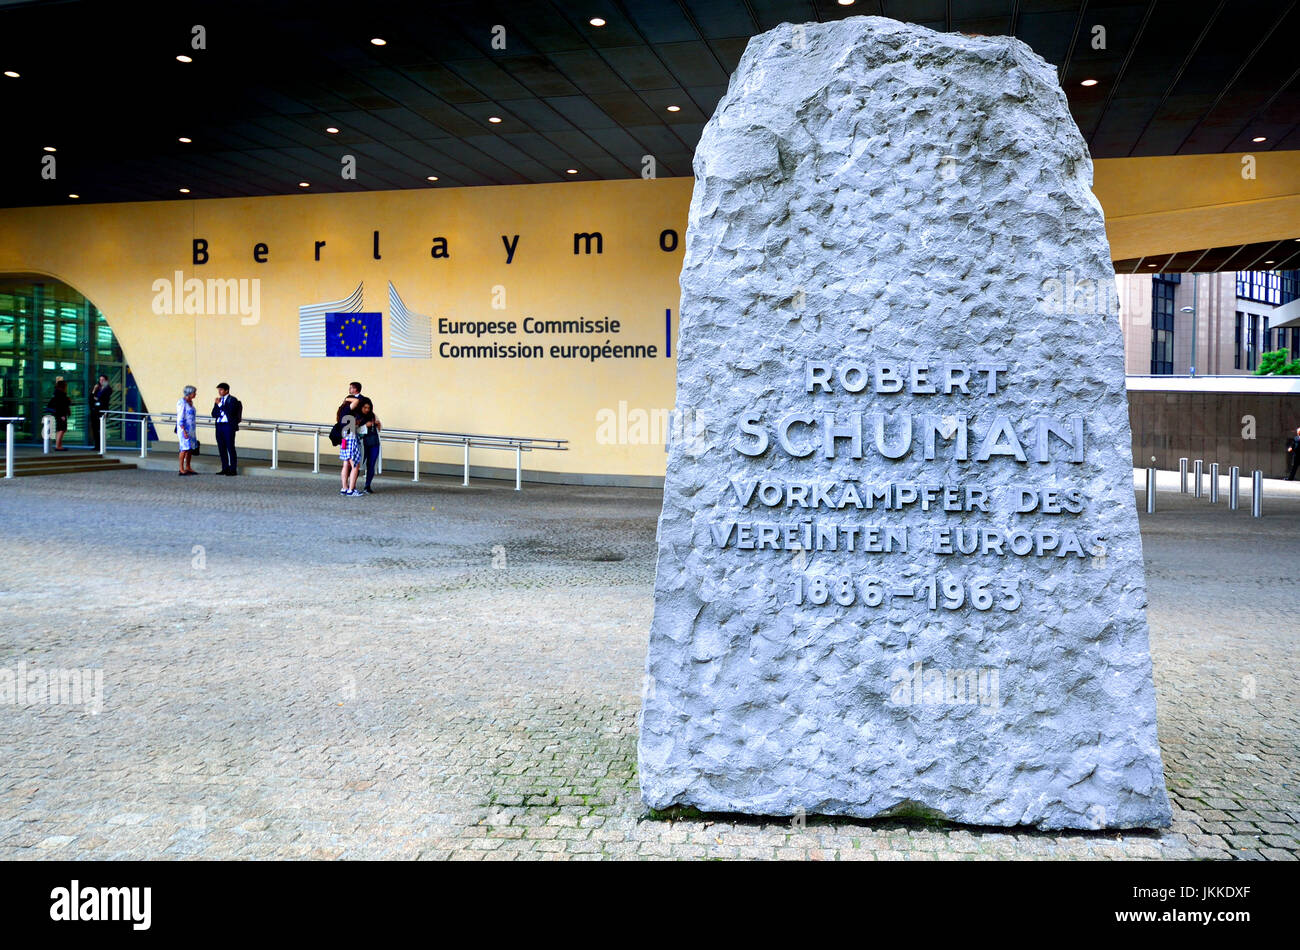 Brüssel, Belgien. Europäischen Kommission Berlaymont-Gebäude. Denkmal für Robert Schuman "Robert Schuman" Promotor des geeinten Europa 1886-1963'... Stockfoto